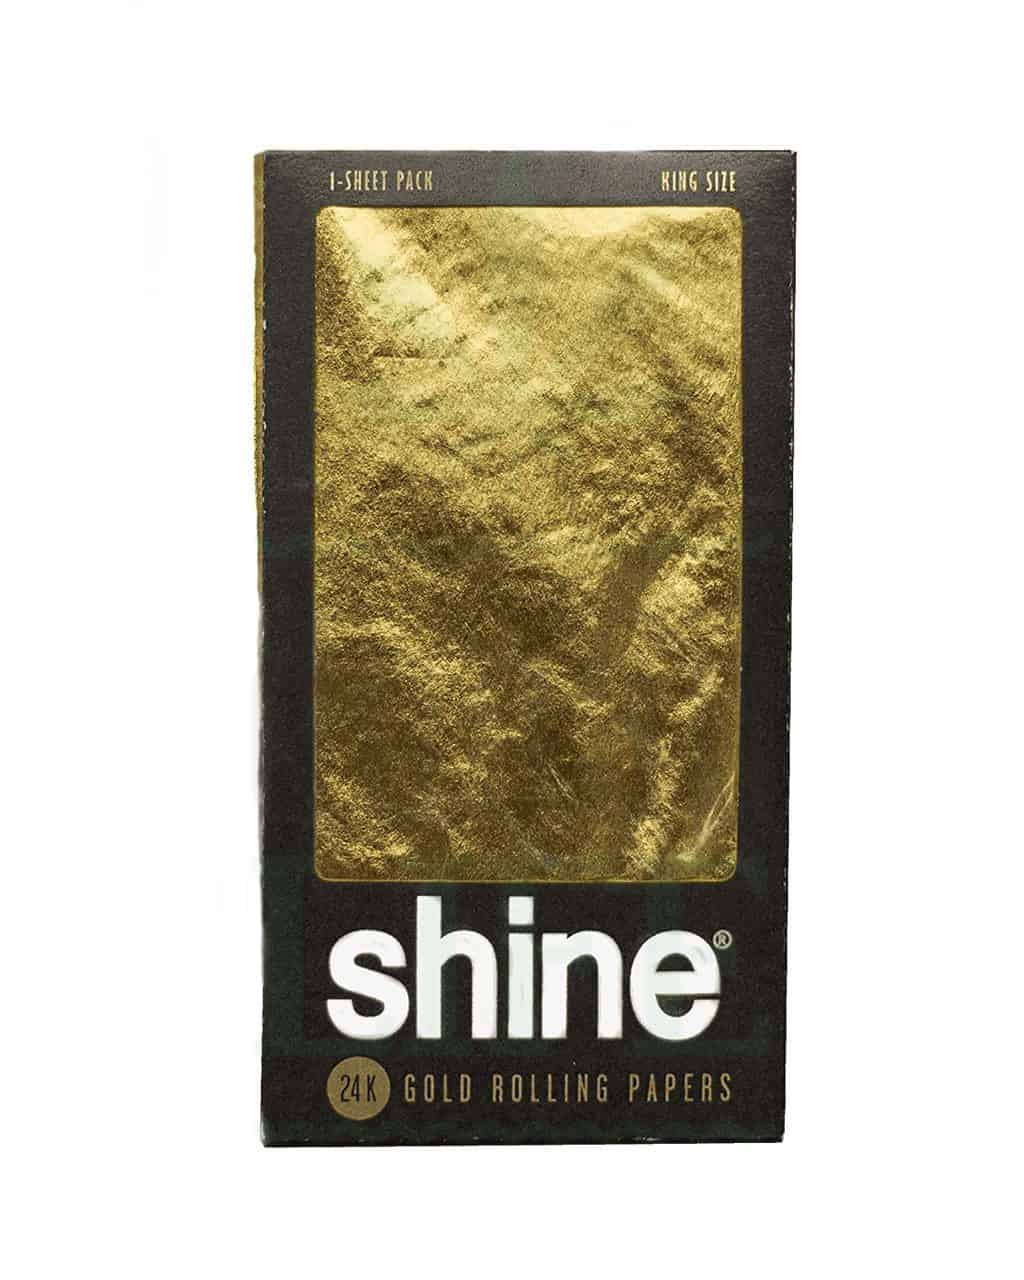 Headshop SHINE 24K Guld King Size rullpapper | Förpackning med 1/6